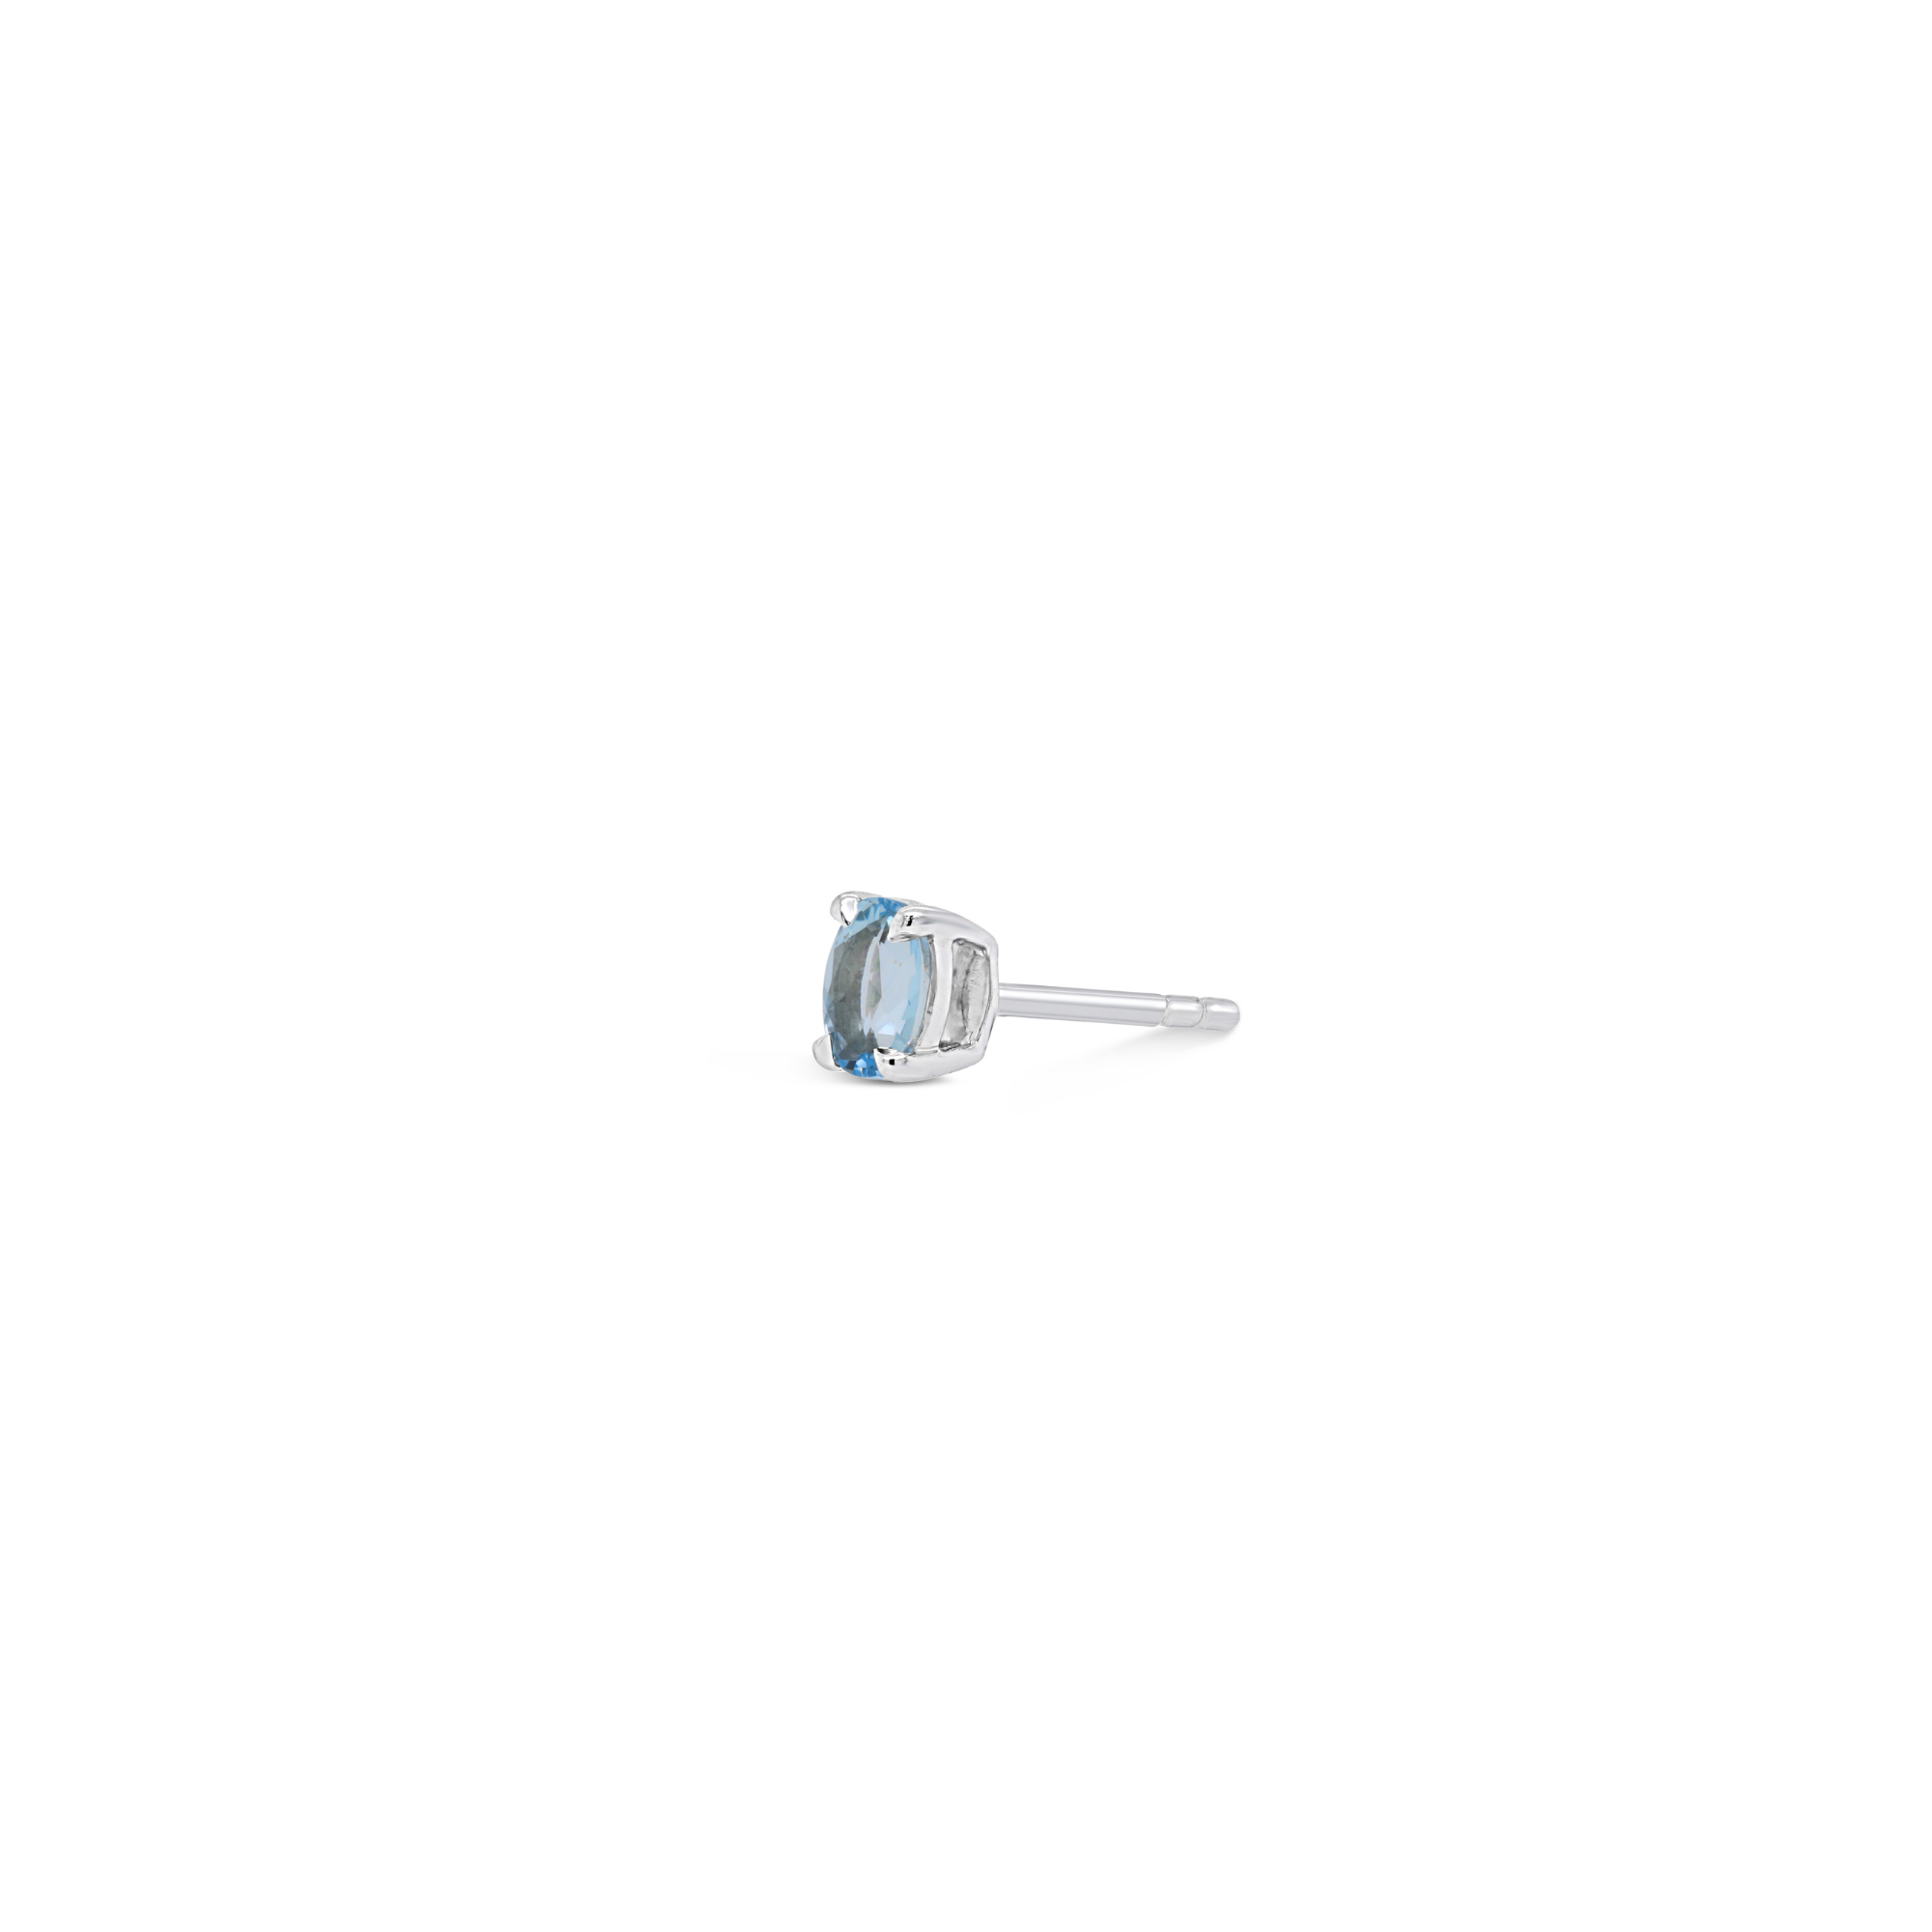 Oval cut aquamarine single earring